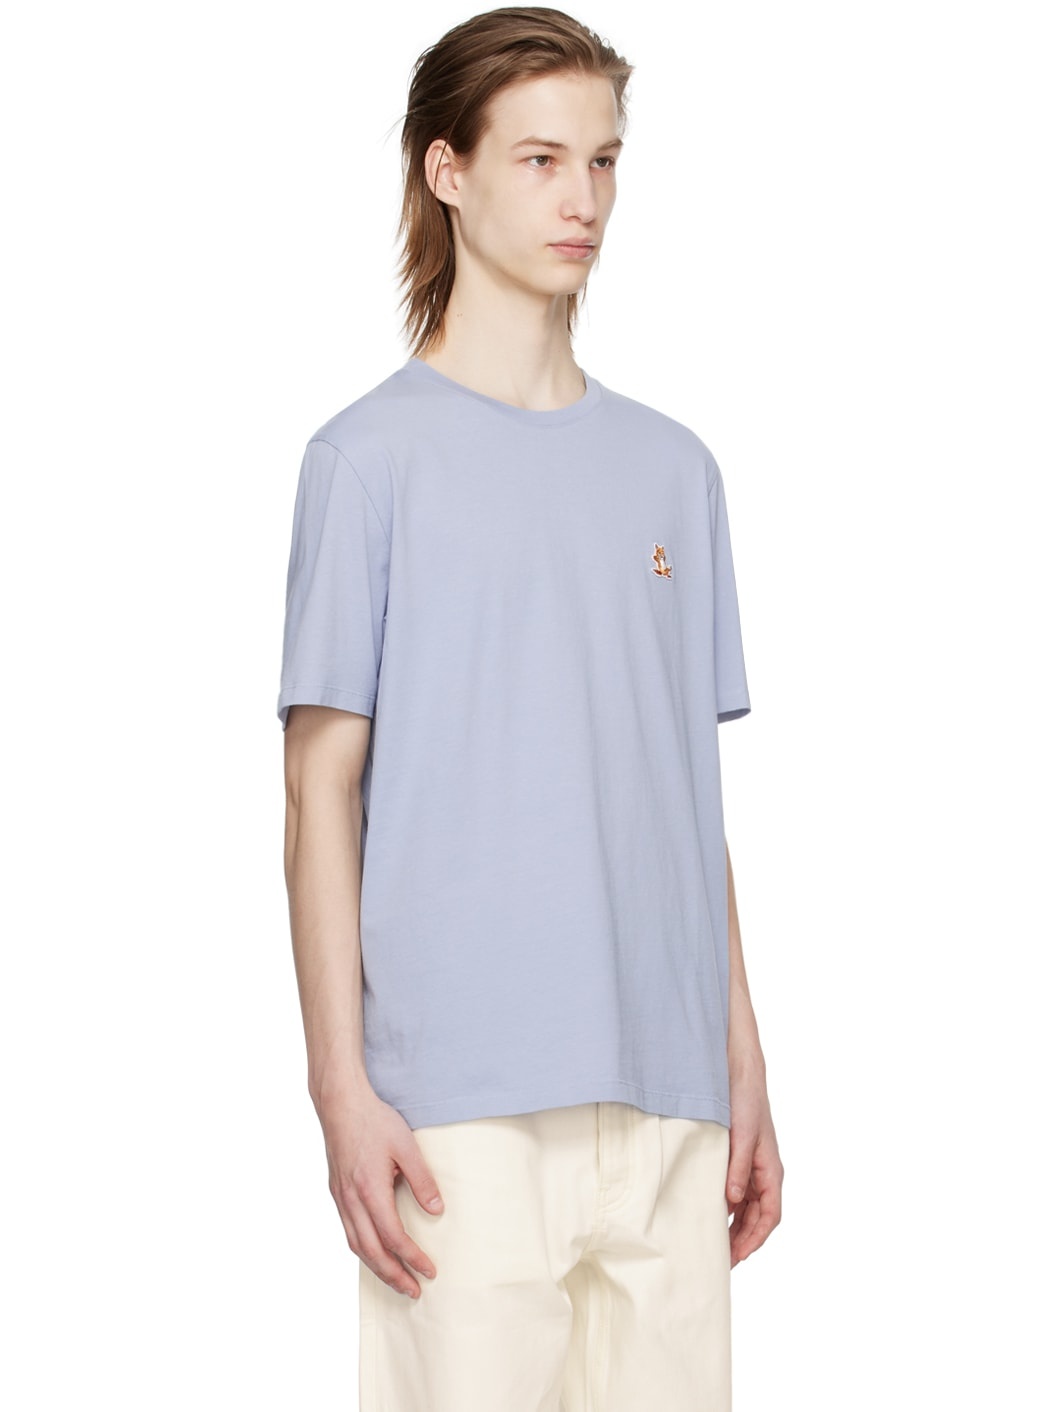 Blue Chillax Fox T-Shirt - 2